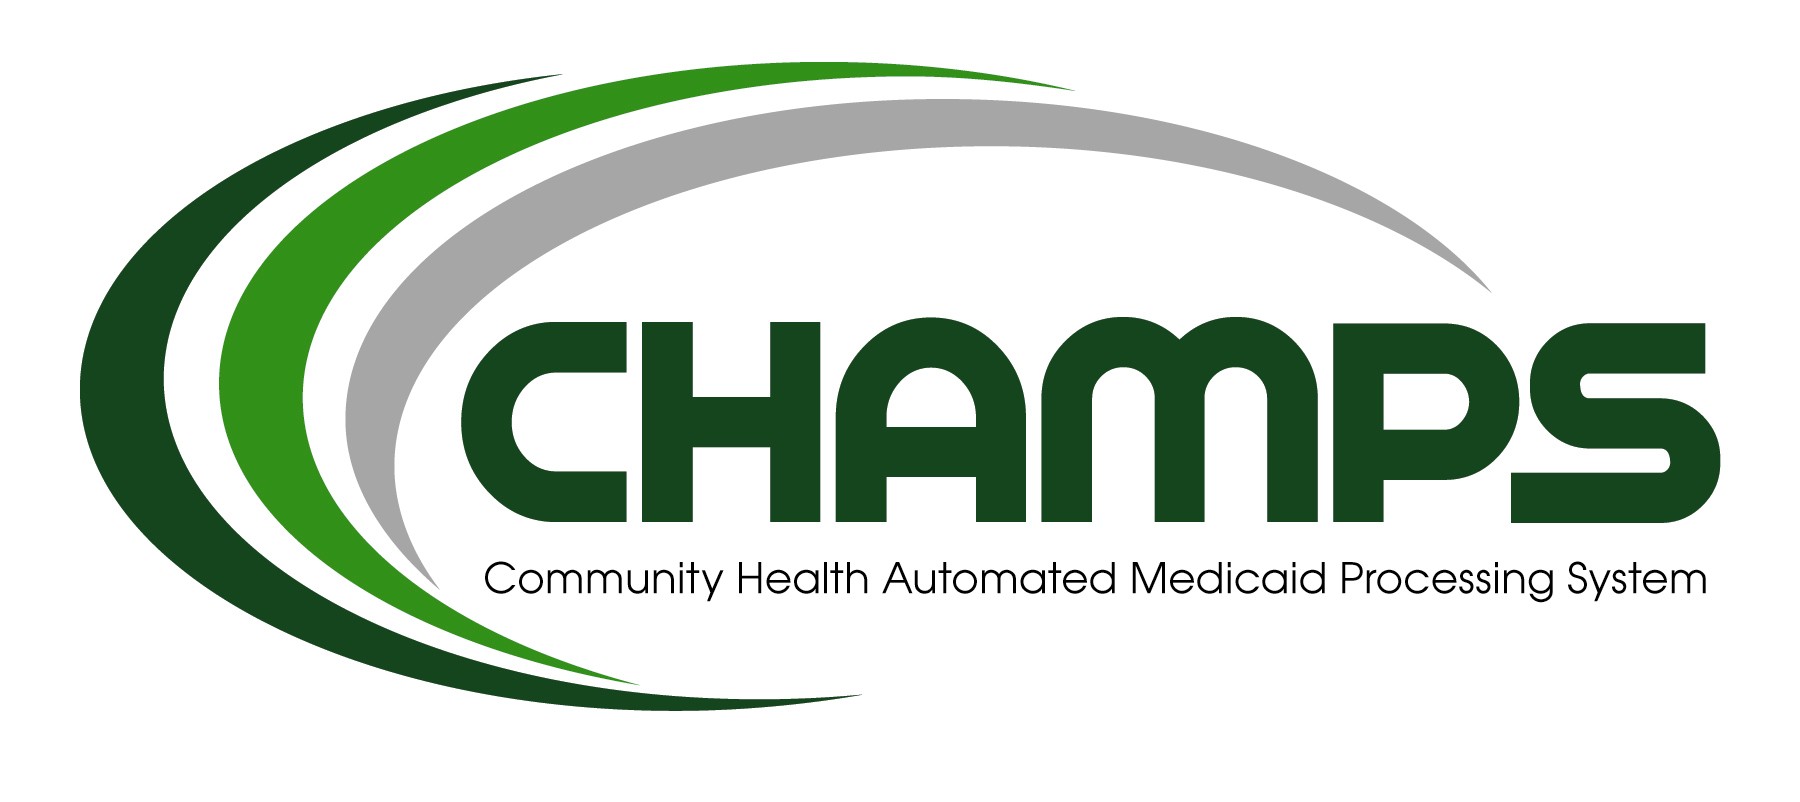 CHAMPS logo